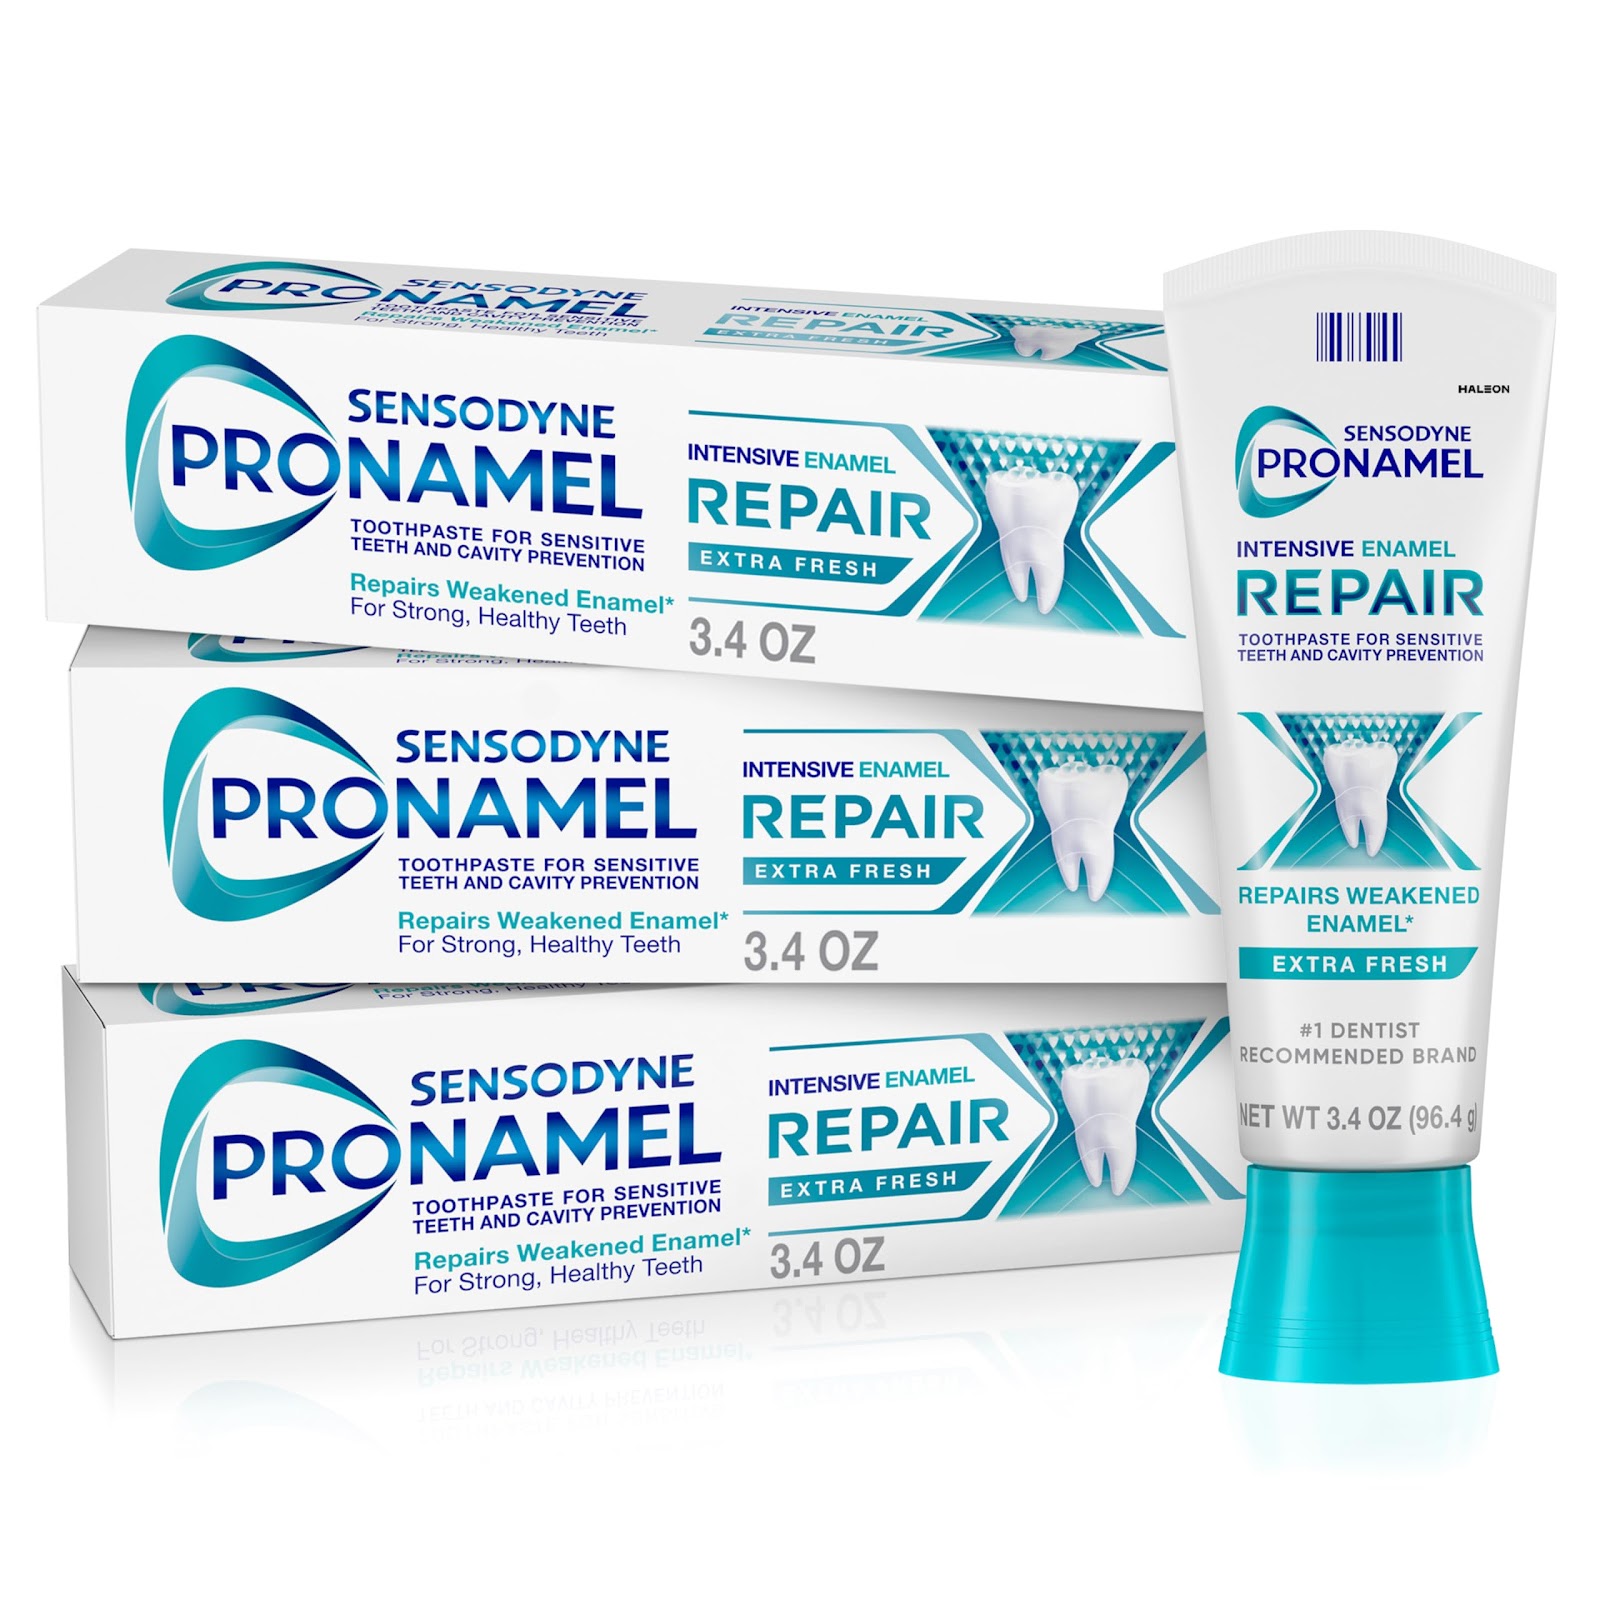 Sensodyne Pronamel Intensive Enamel Repair Toothpaste for Sensitive Teeth